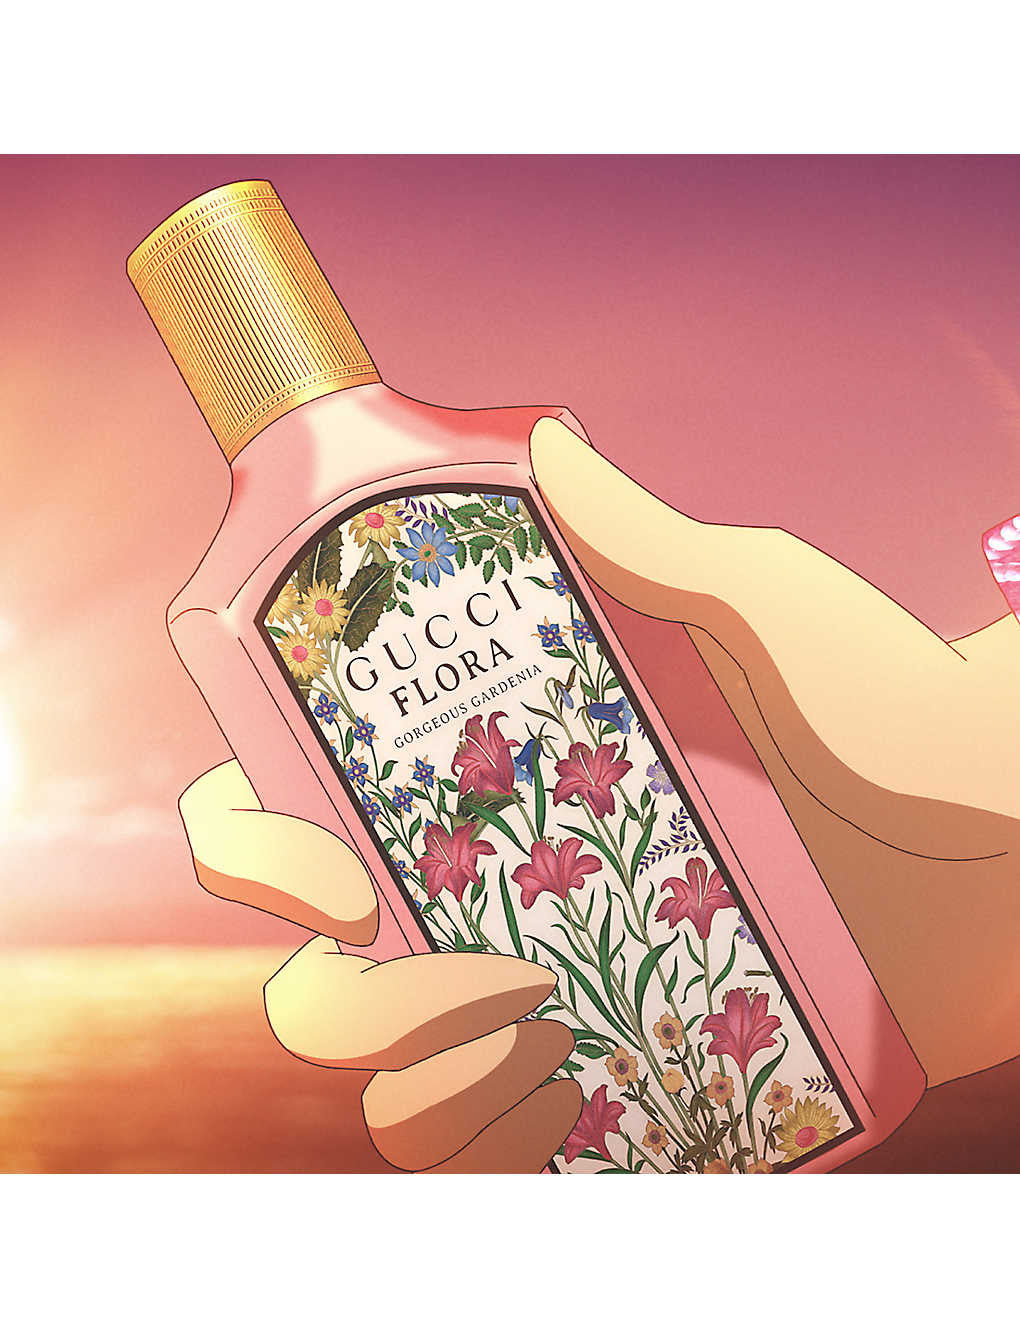 Gucci Flora Gorgeous Gardenia eau de parfum 50ml